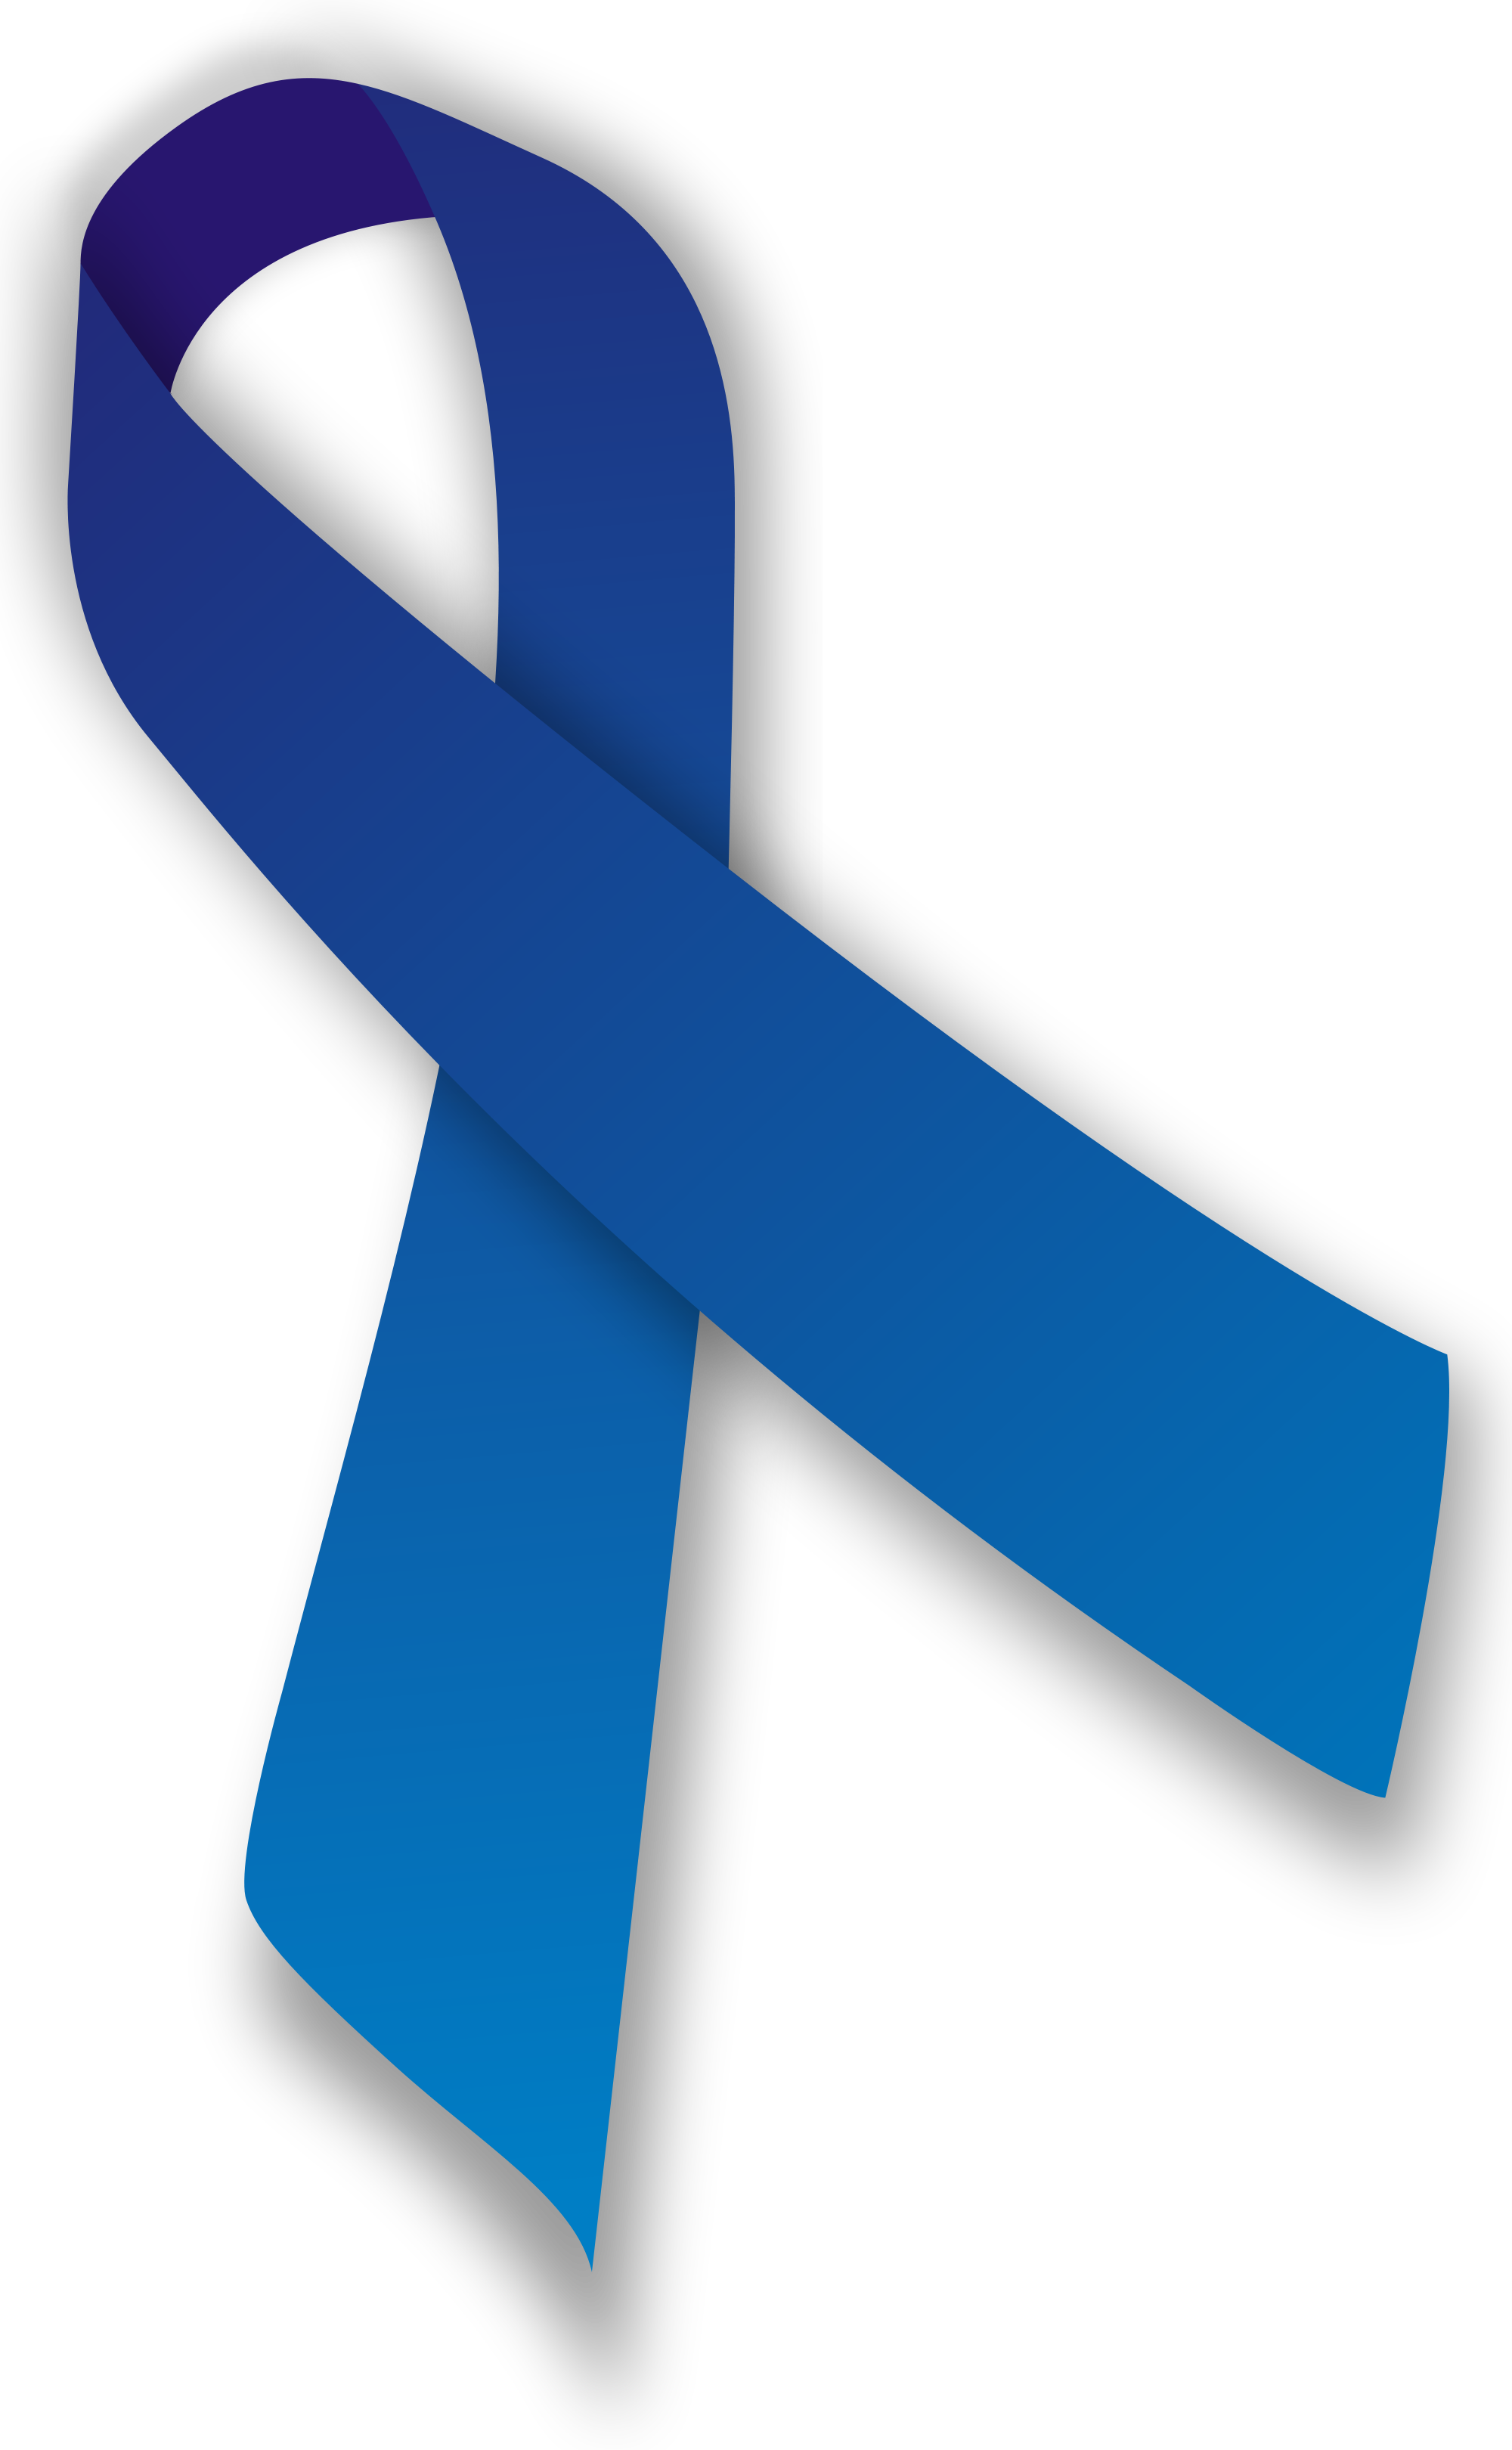 Blue Ribbon PNG Transparent Image